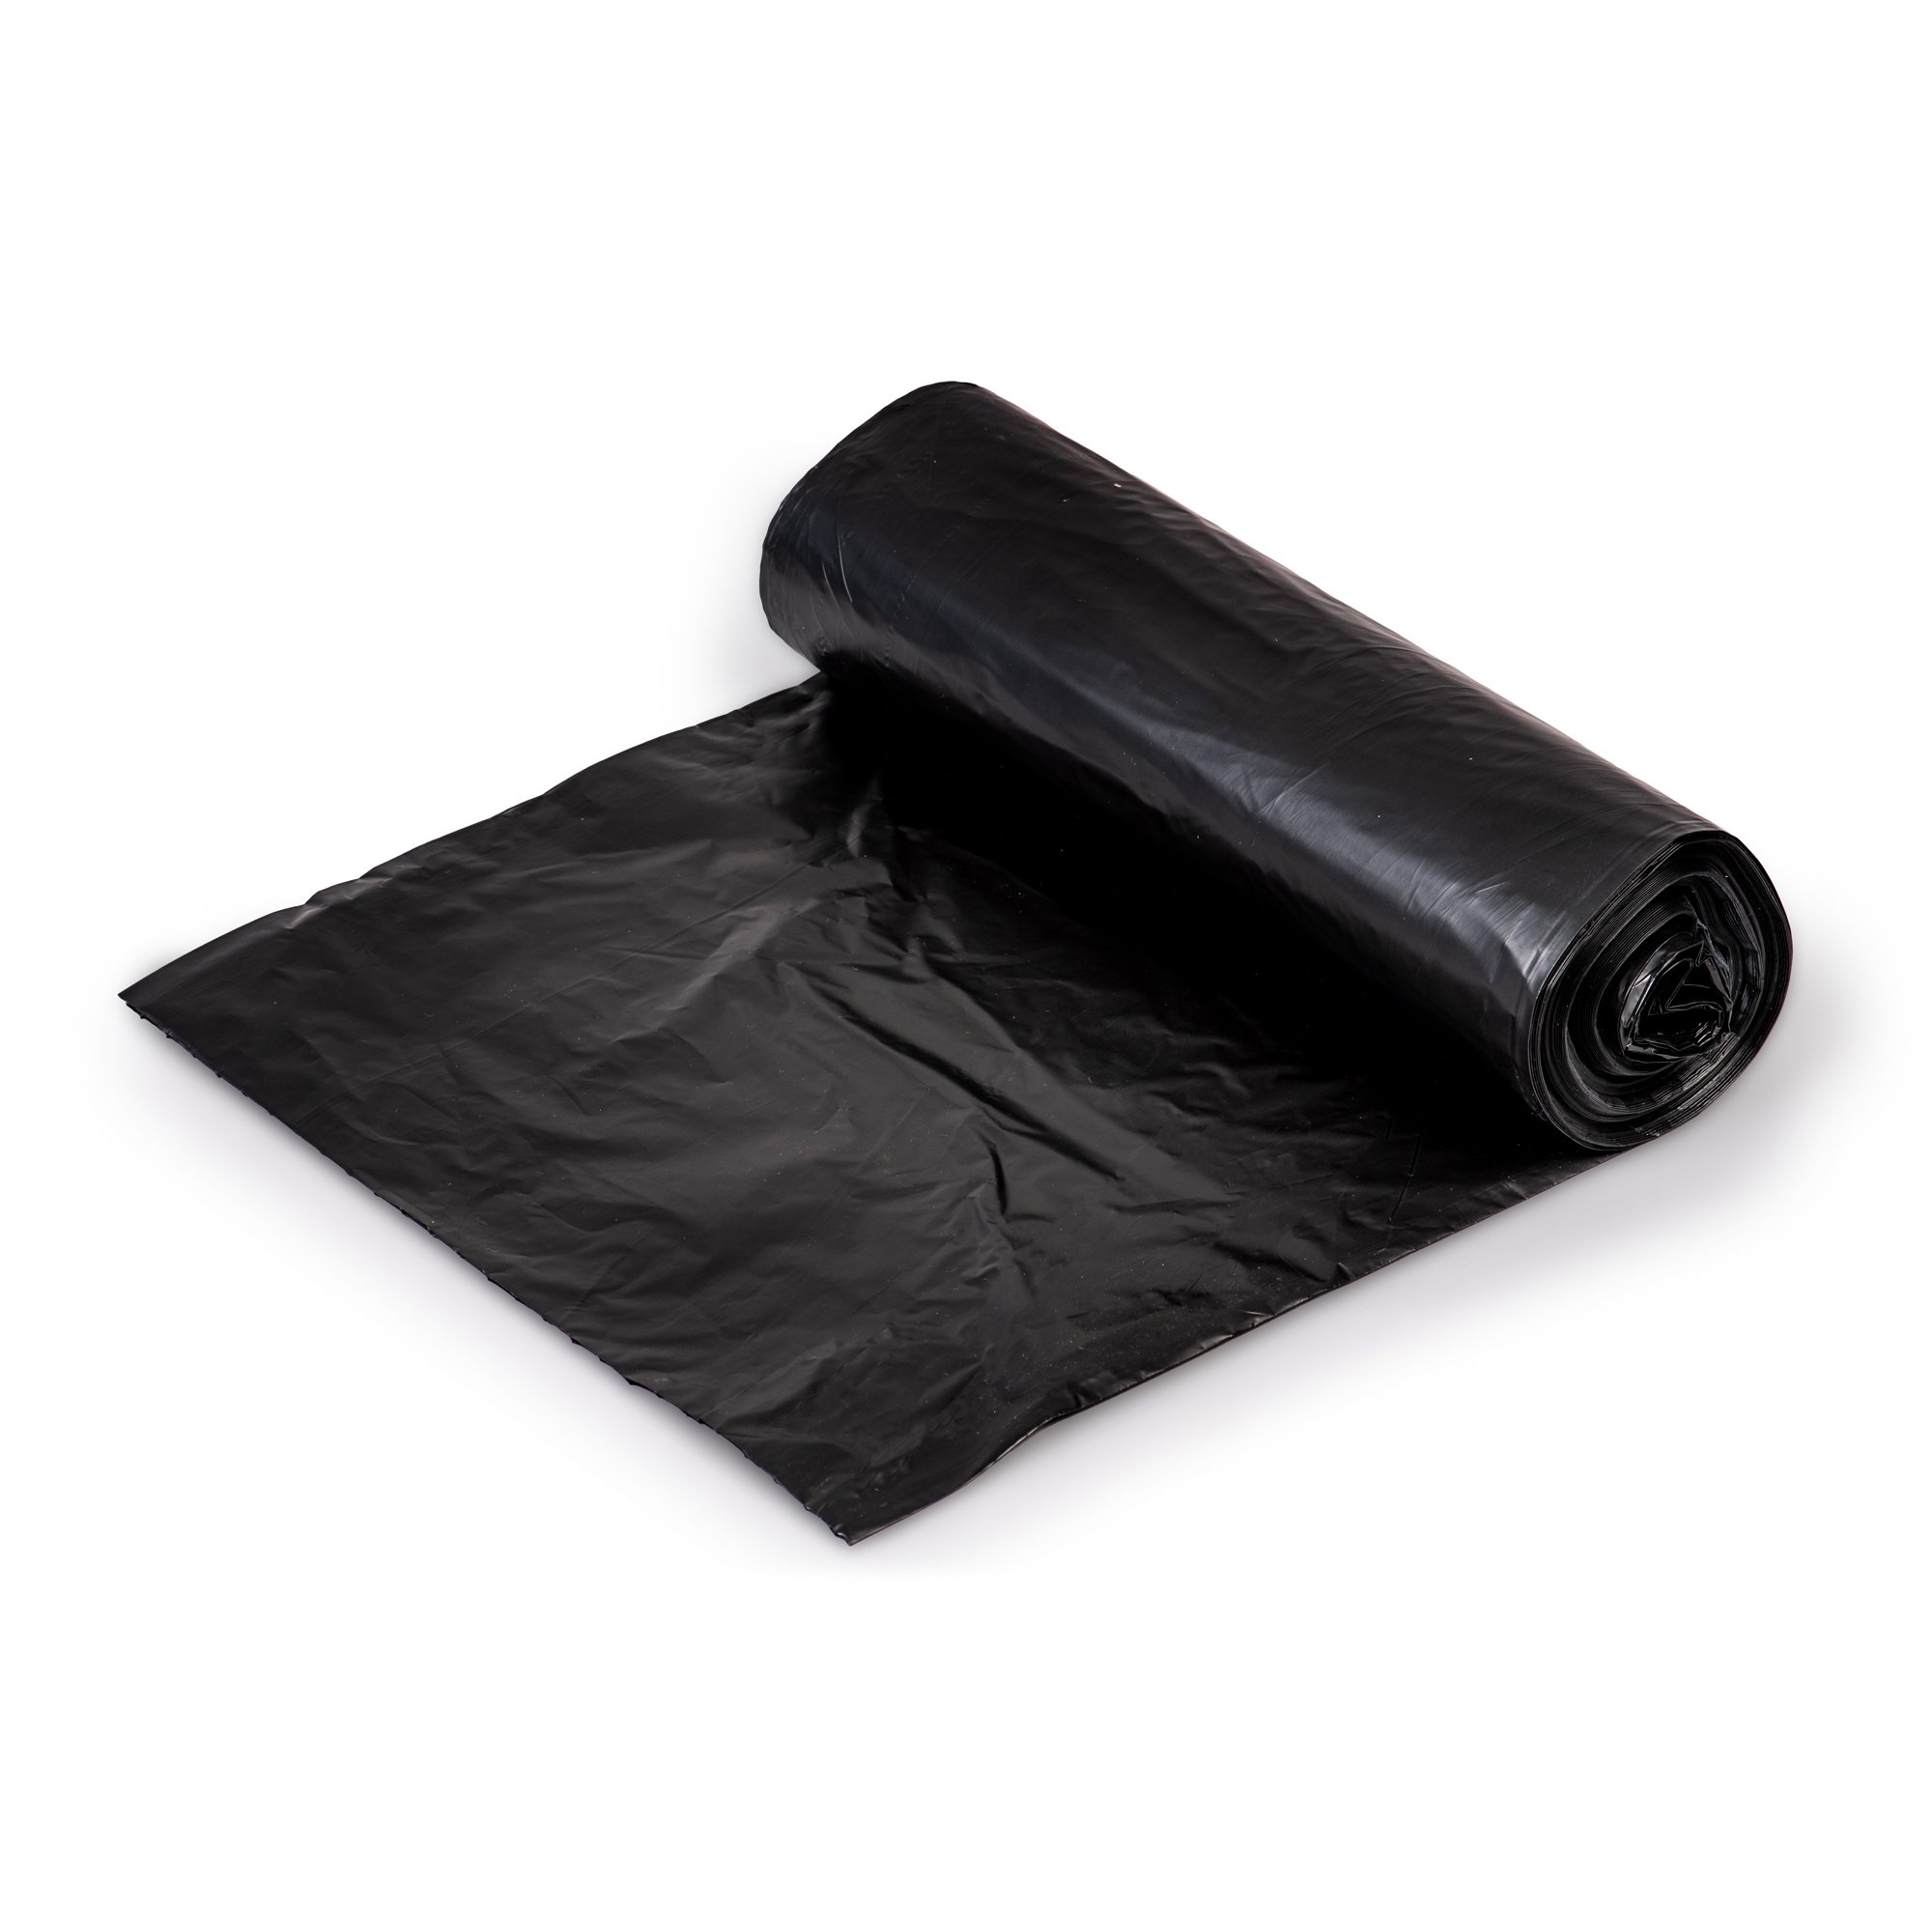 10,000 medical grade trash bags in black – ApexTransGulfSite